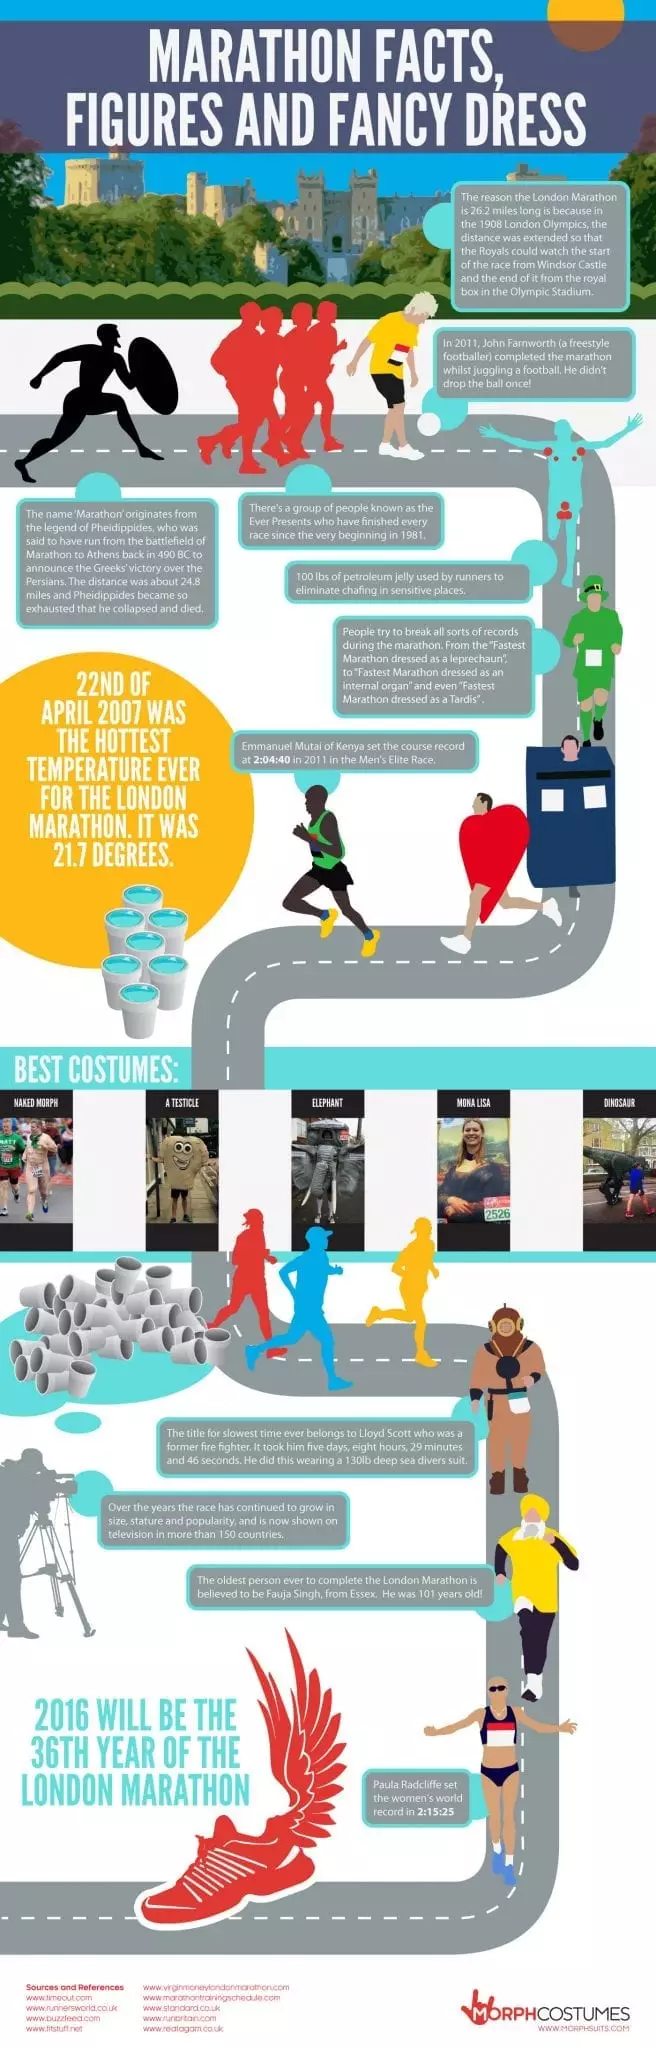 London Marathon fancy dress infographic